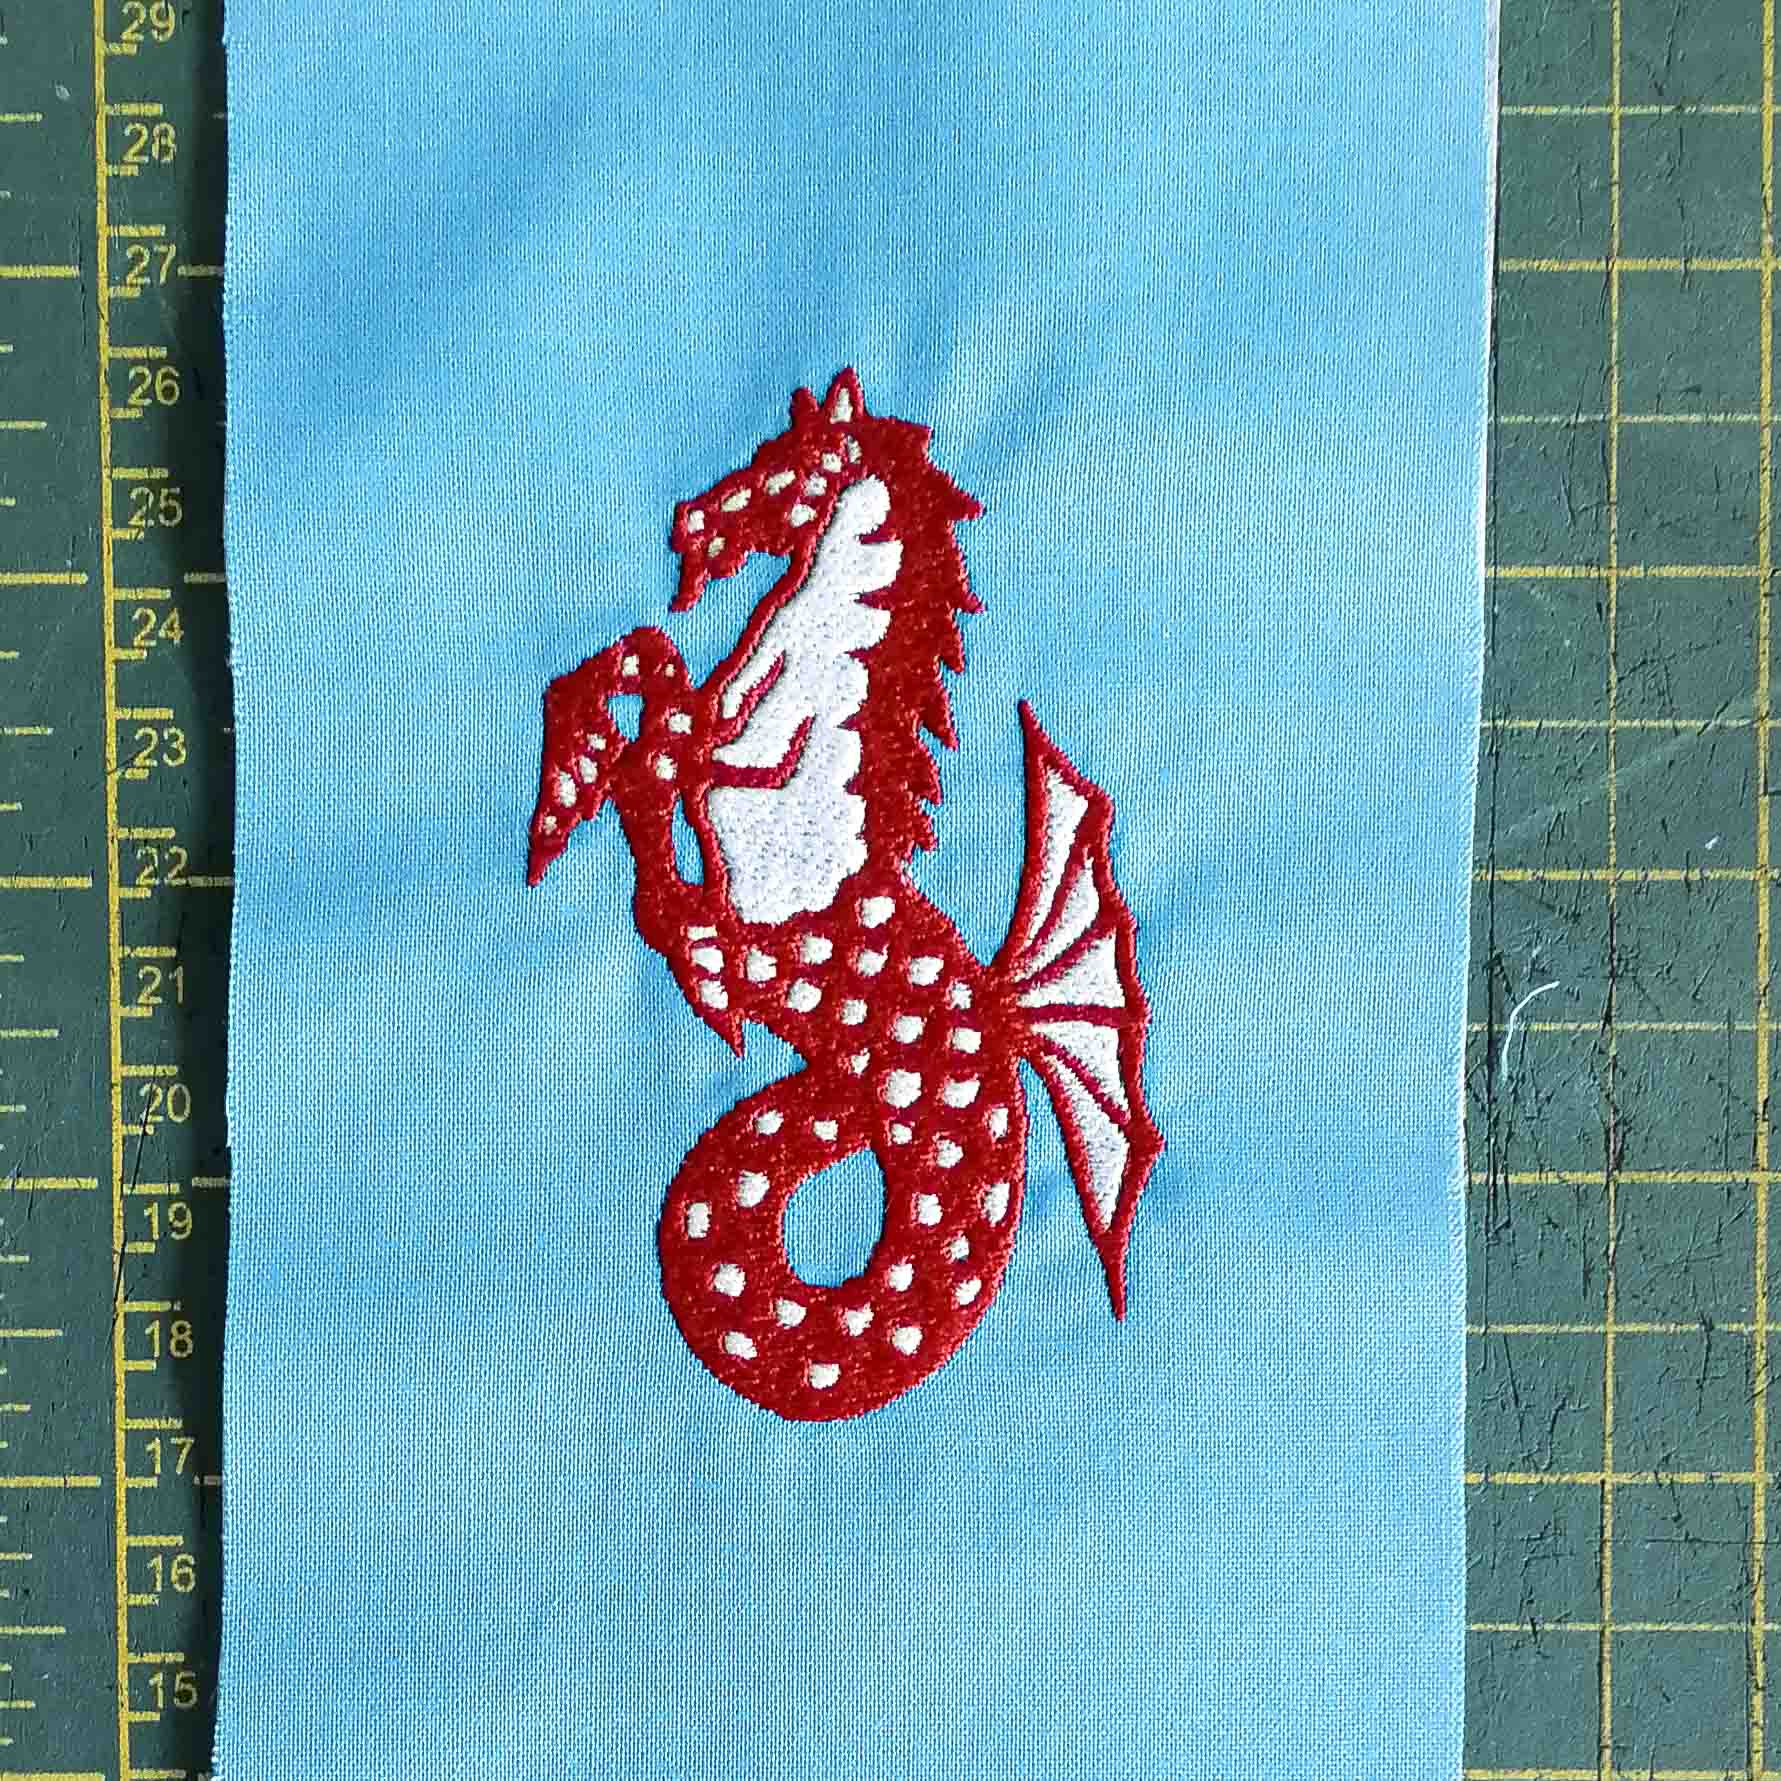 Brighton custom personalised embroidery